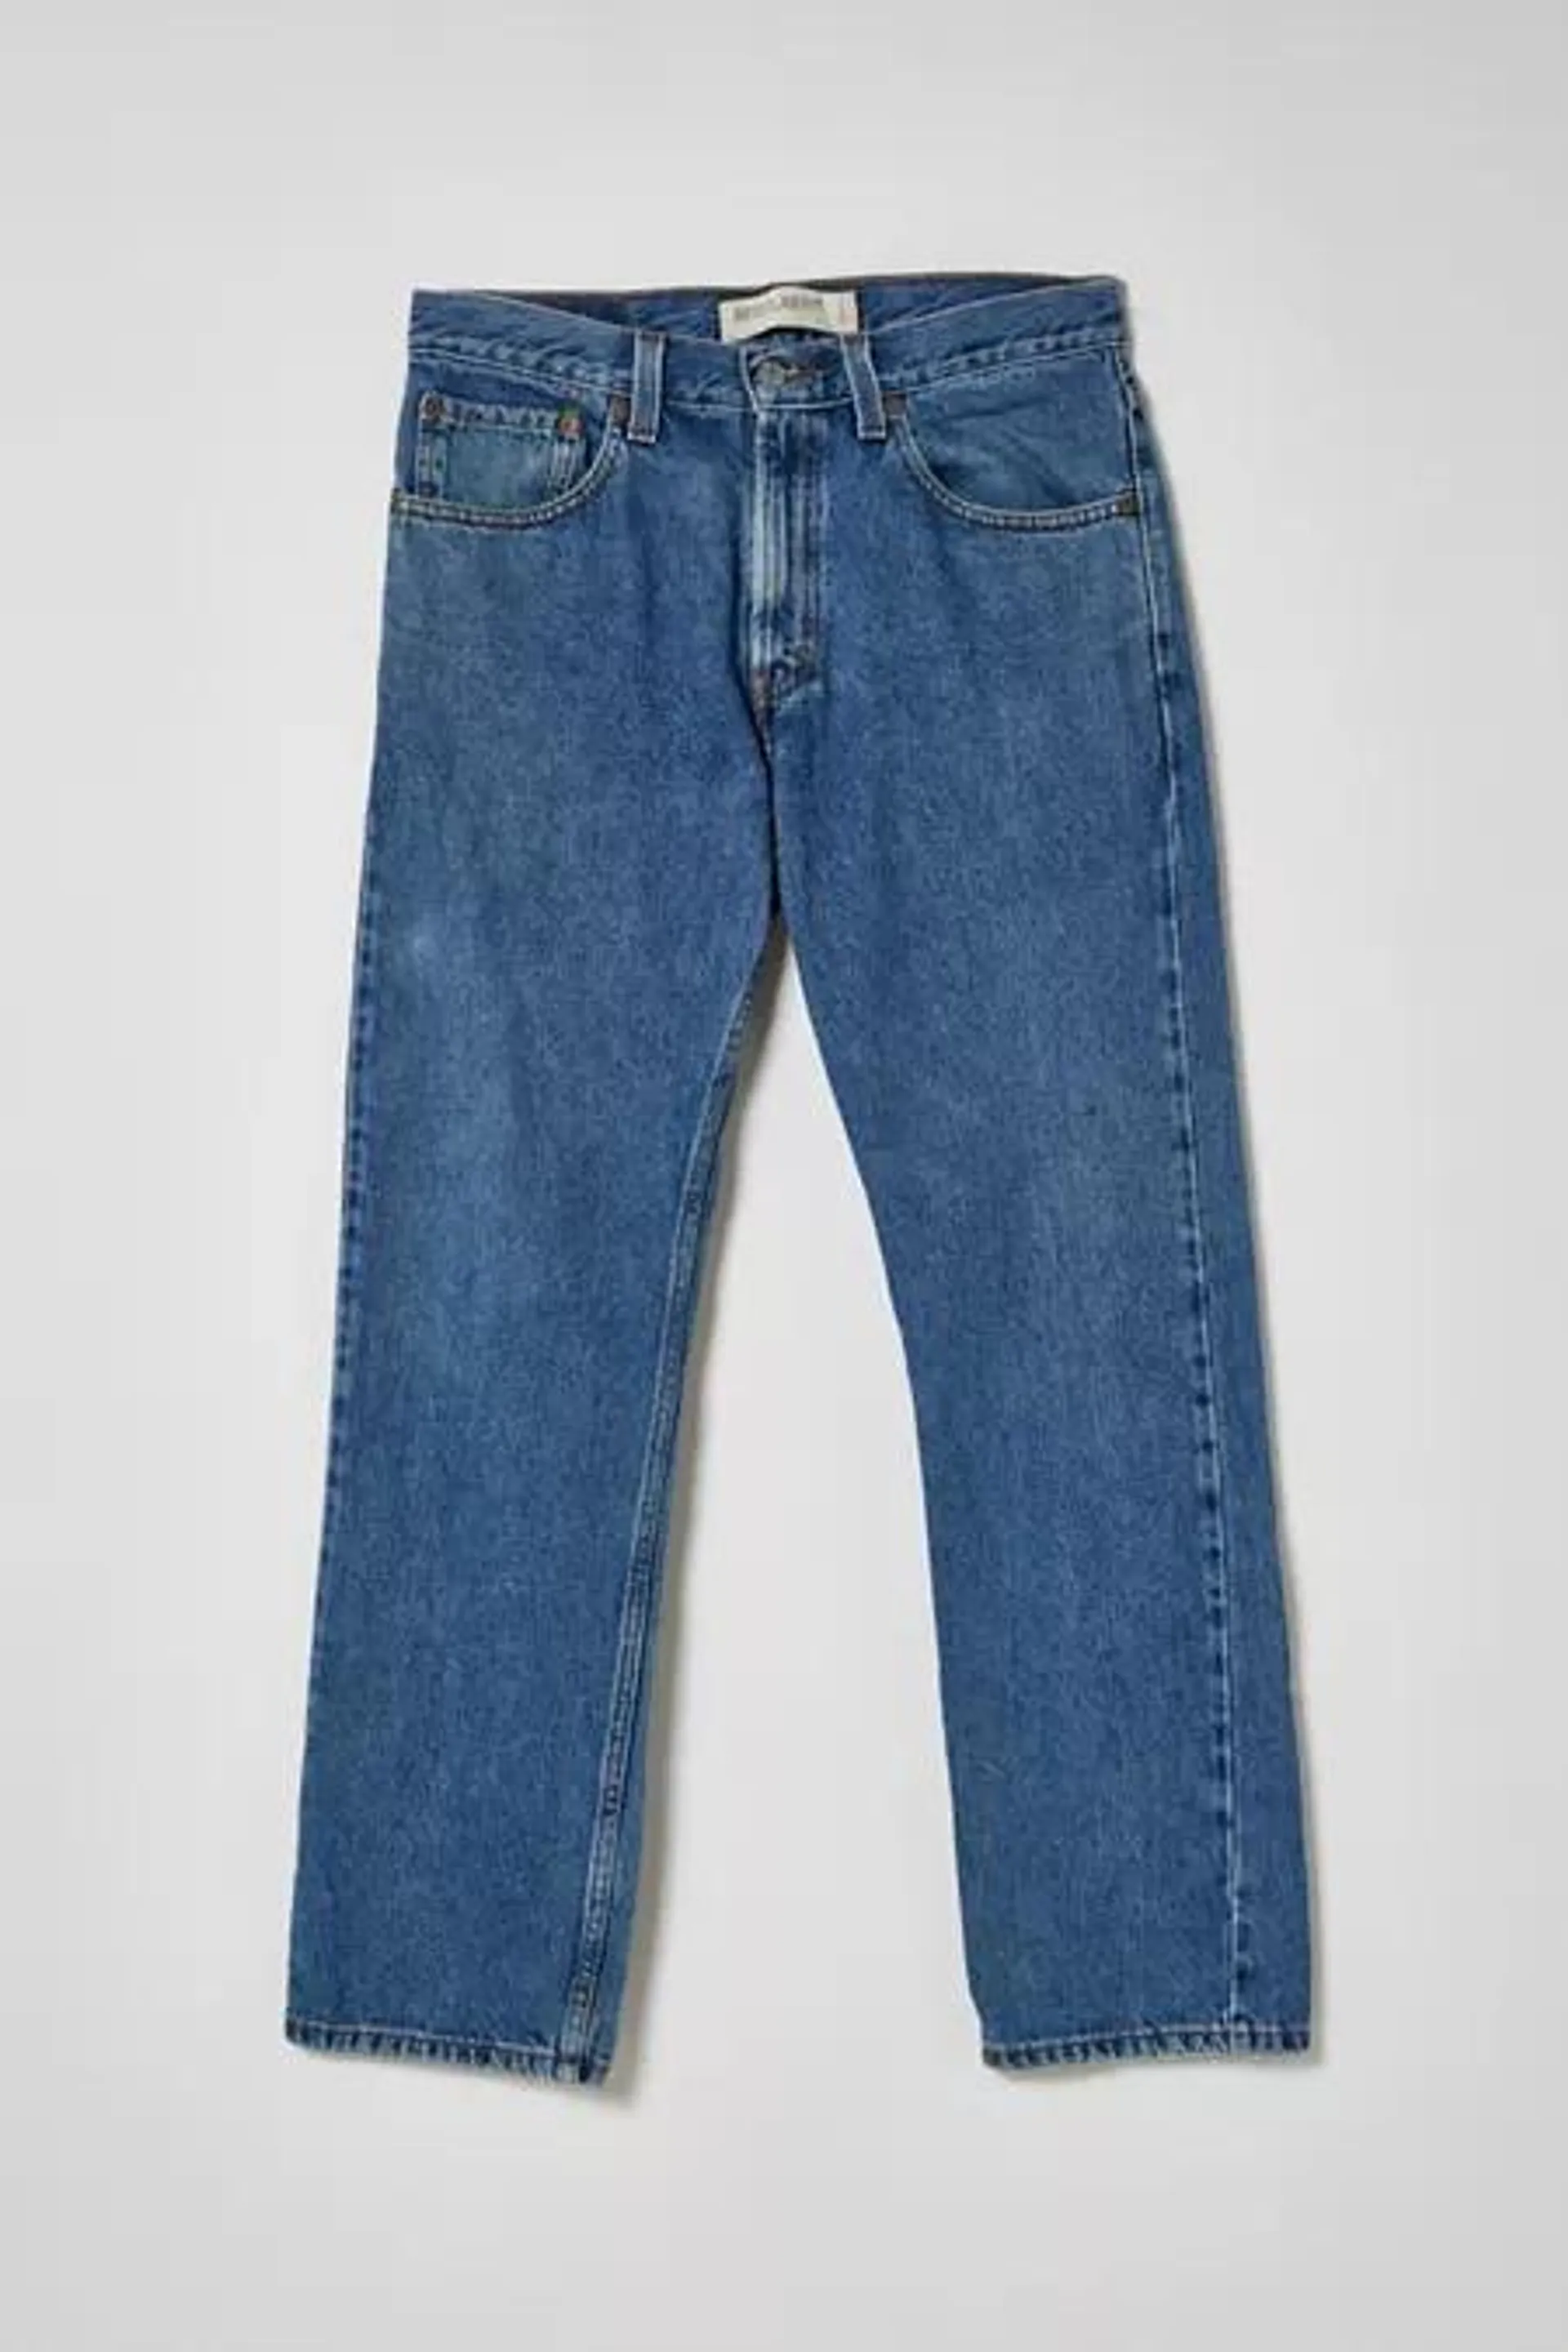 Vintage Levi's Jean